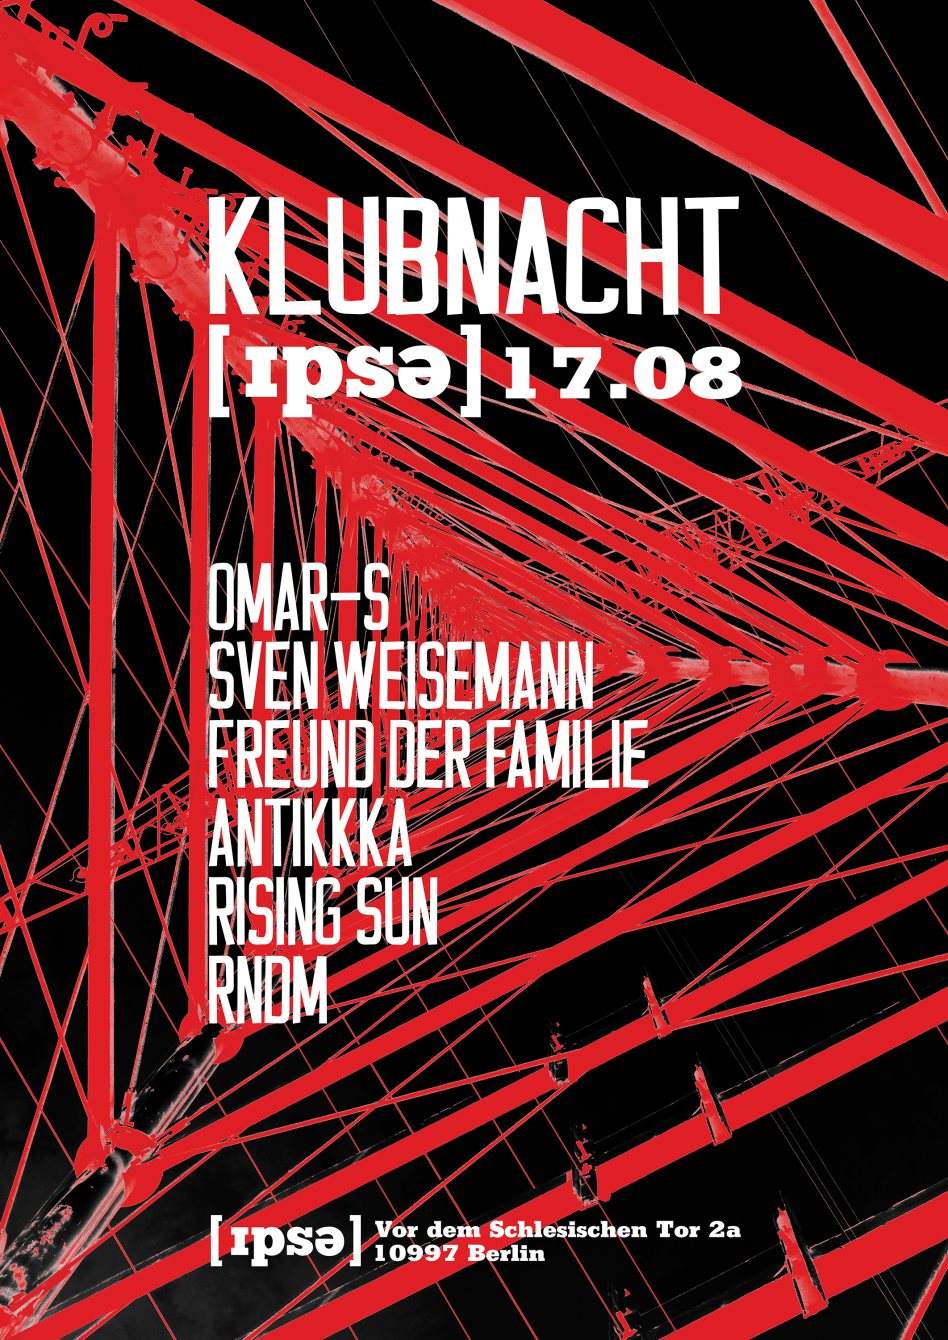 Klubnacht with Omar-S, Sven Weisemann and More - Página trasera